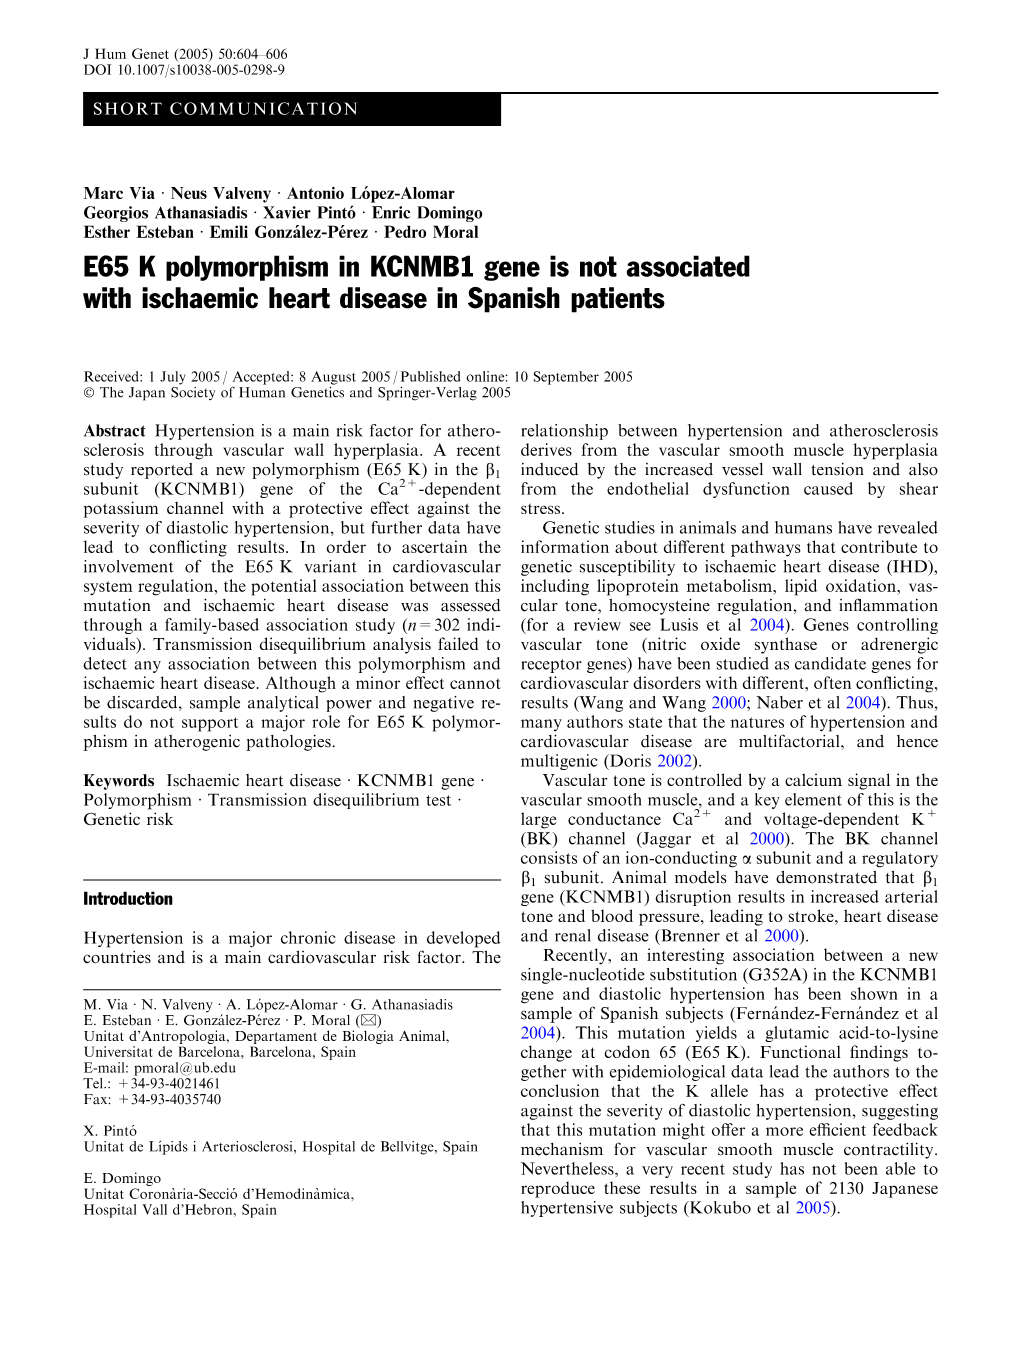 E65 K Polymorphism in KCNMB1 Gene Is Not Associated with Ischaemic Heart Disease in Spanish Patients